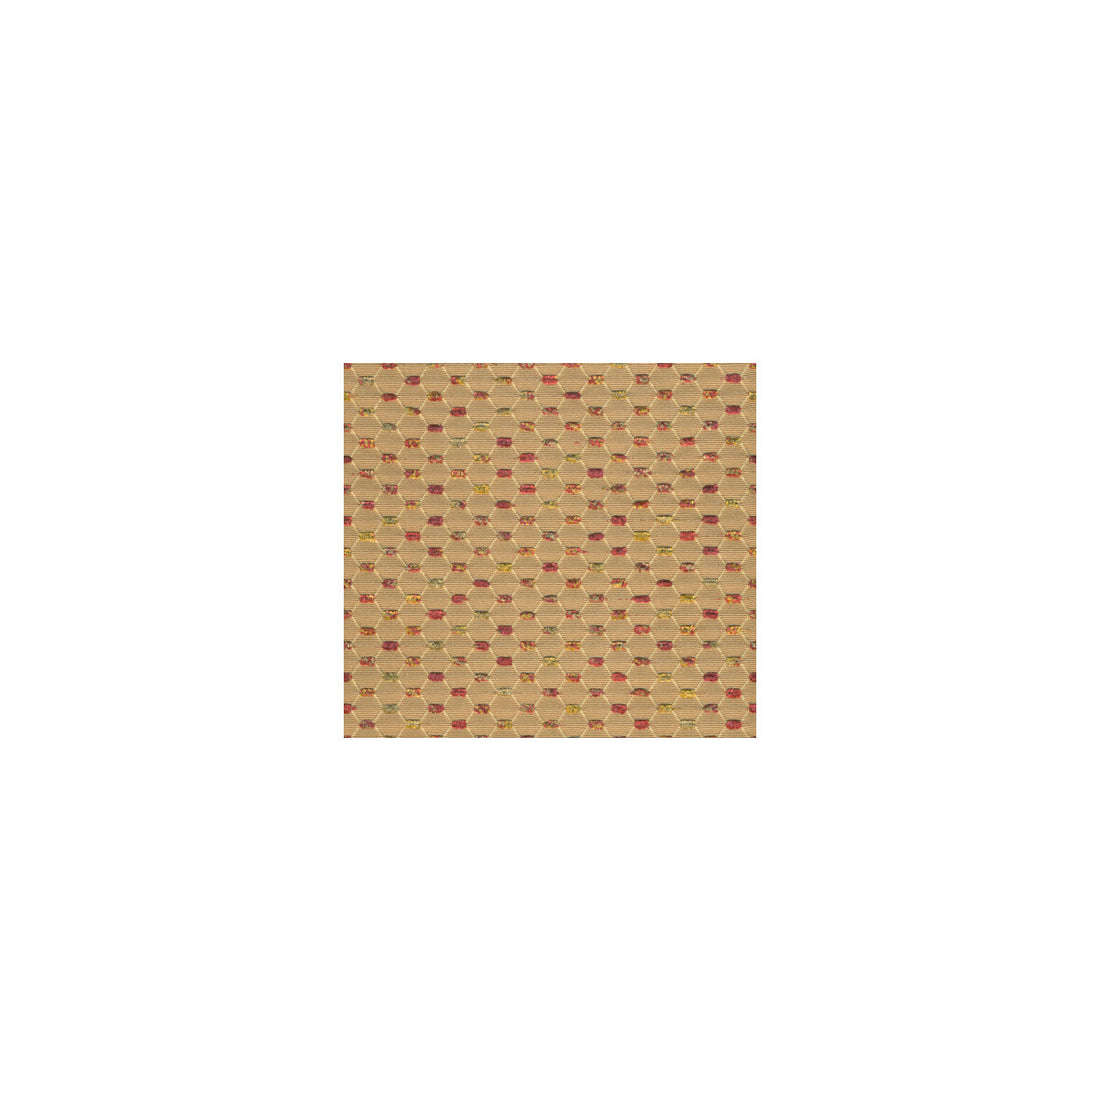 Kravet Smart fabric in 30631-419 color - pattern 30631.419.0 - by Kravet Smart